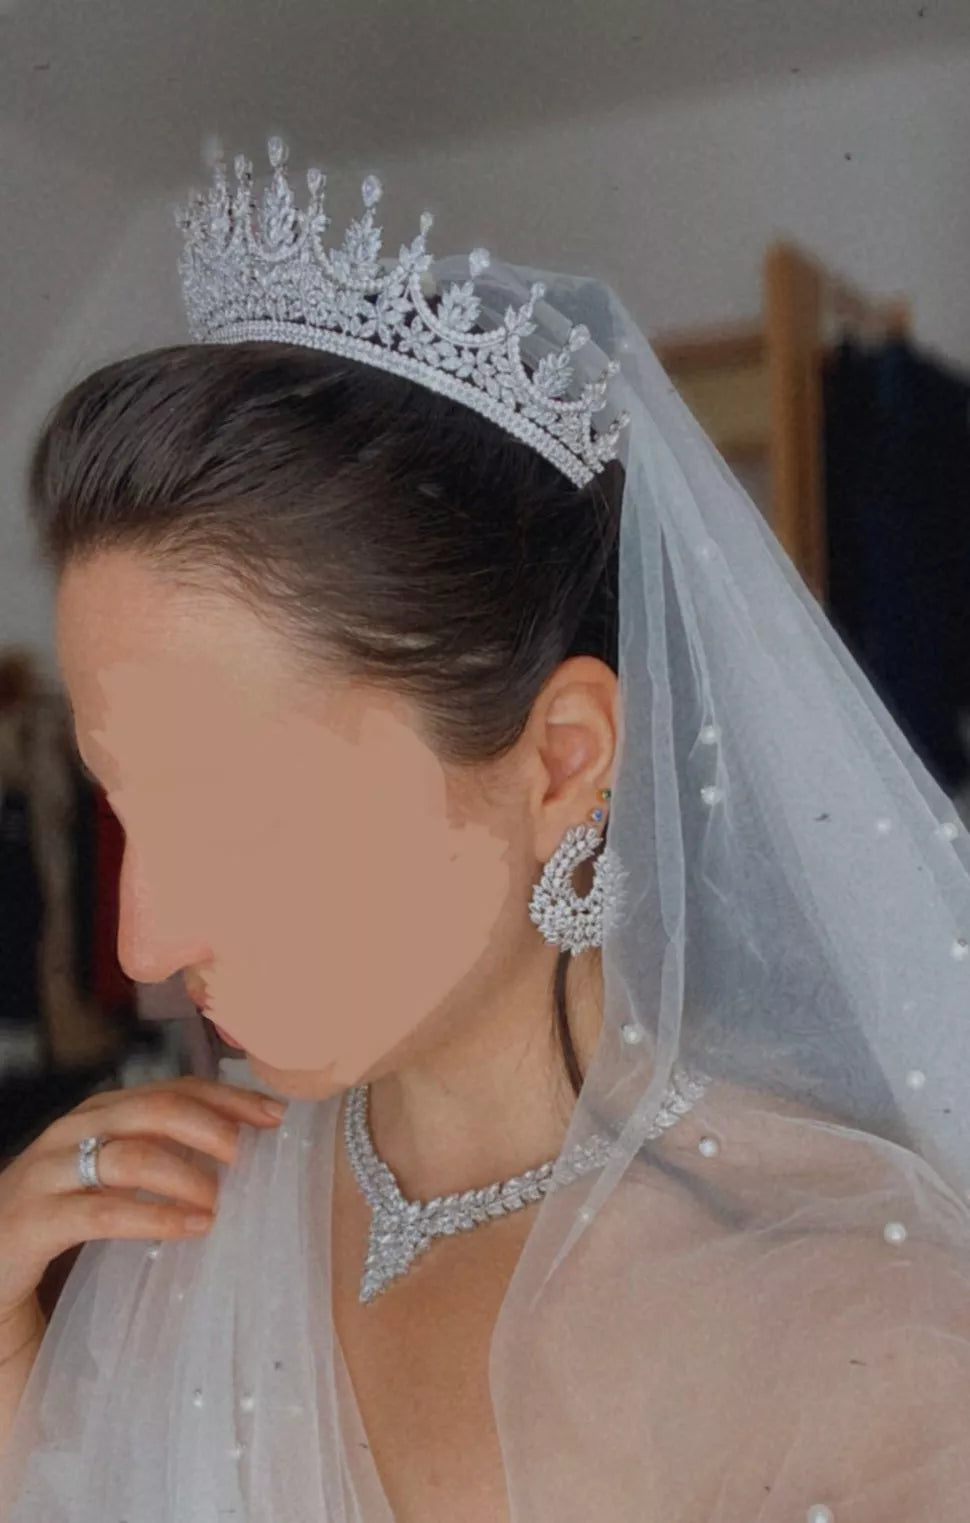 European and American Gorgeous Crystal Crowns Tiaras  AAA Cubic Zirconia Kорона Bride Headband Wedding Headdress